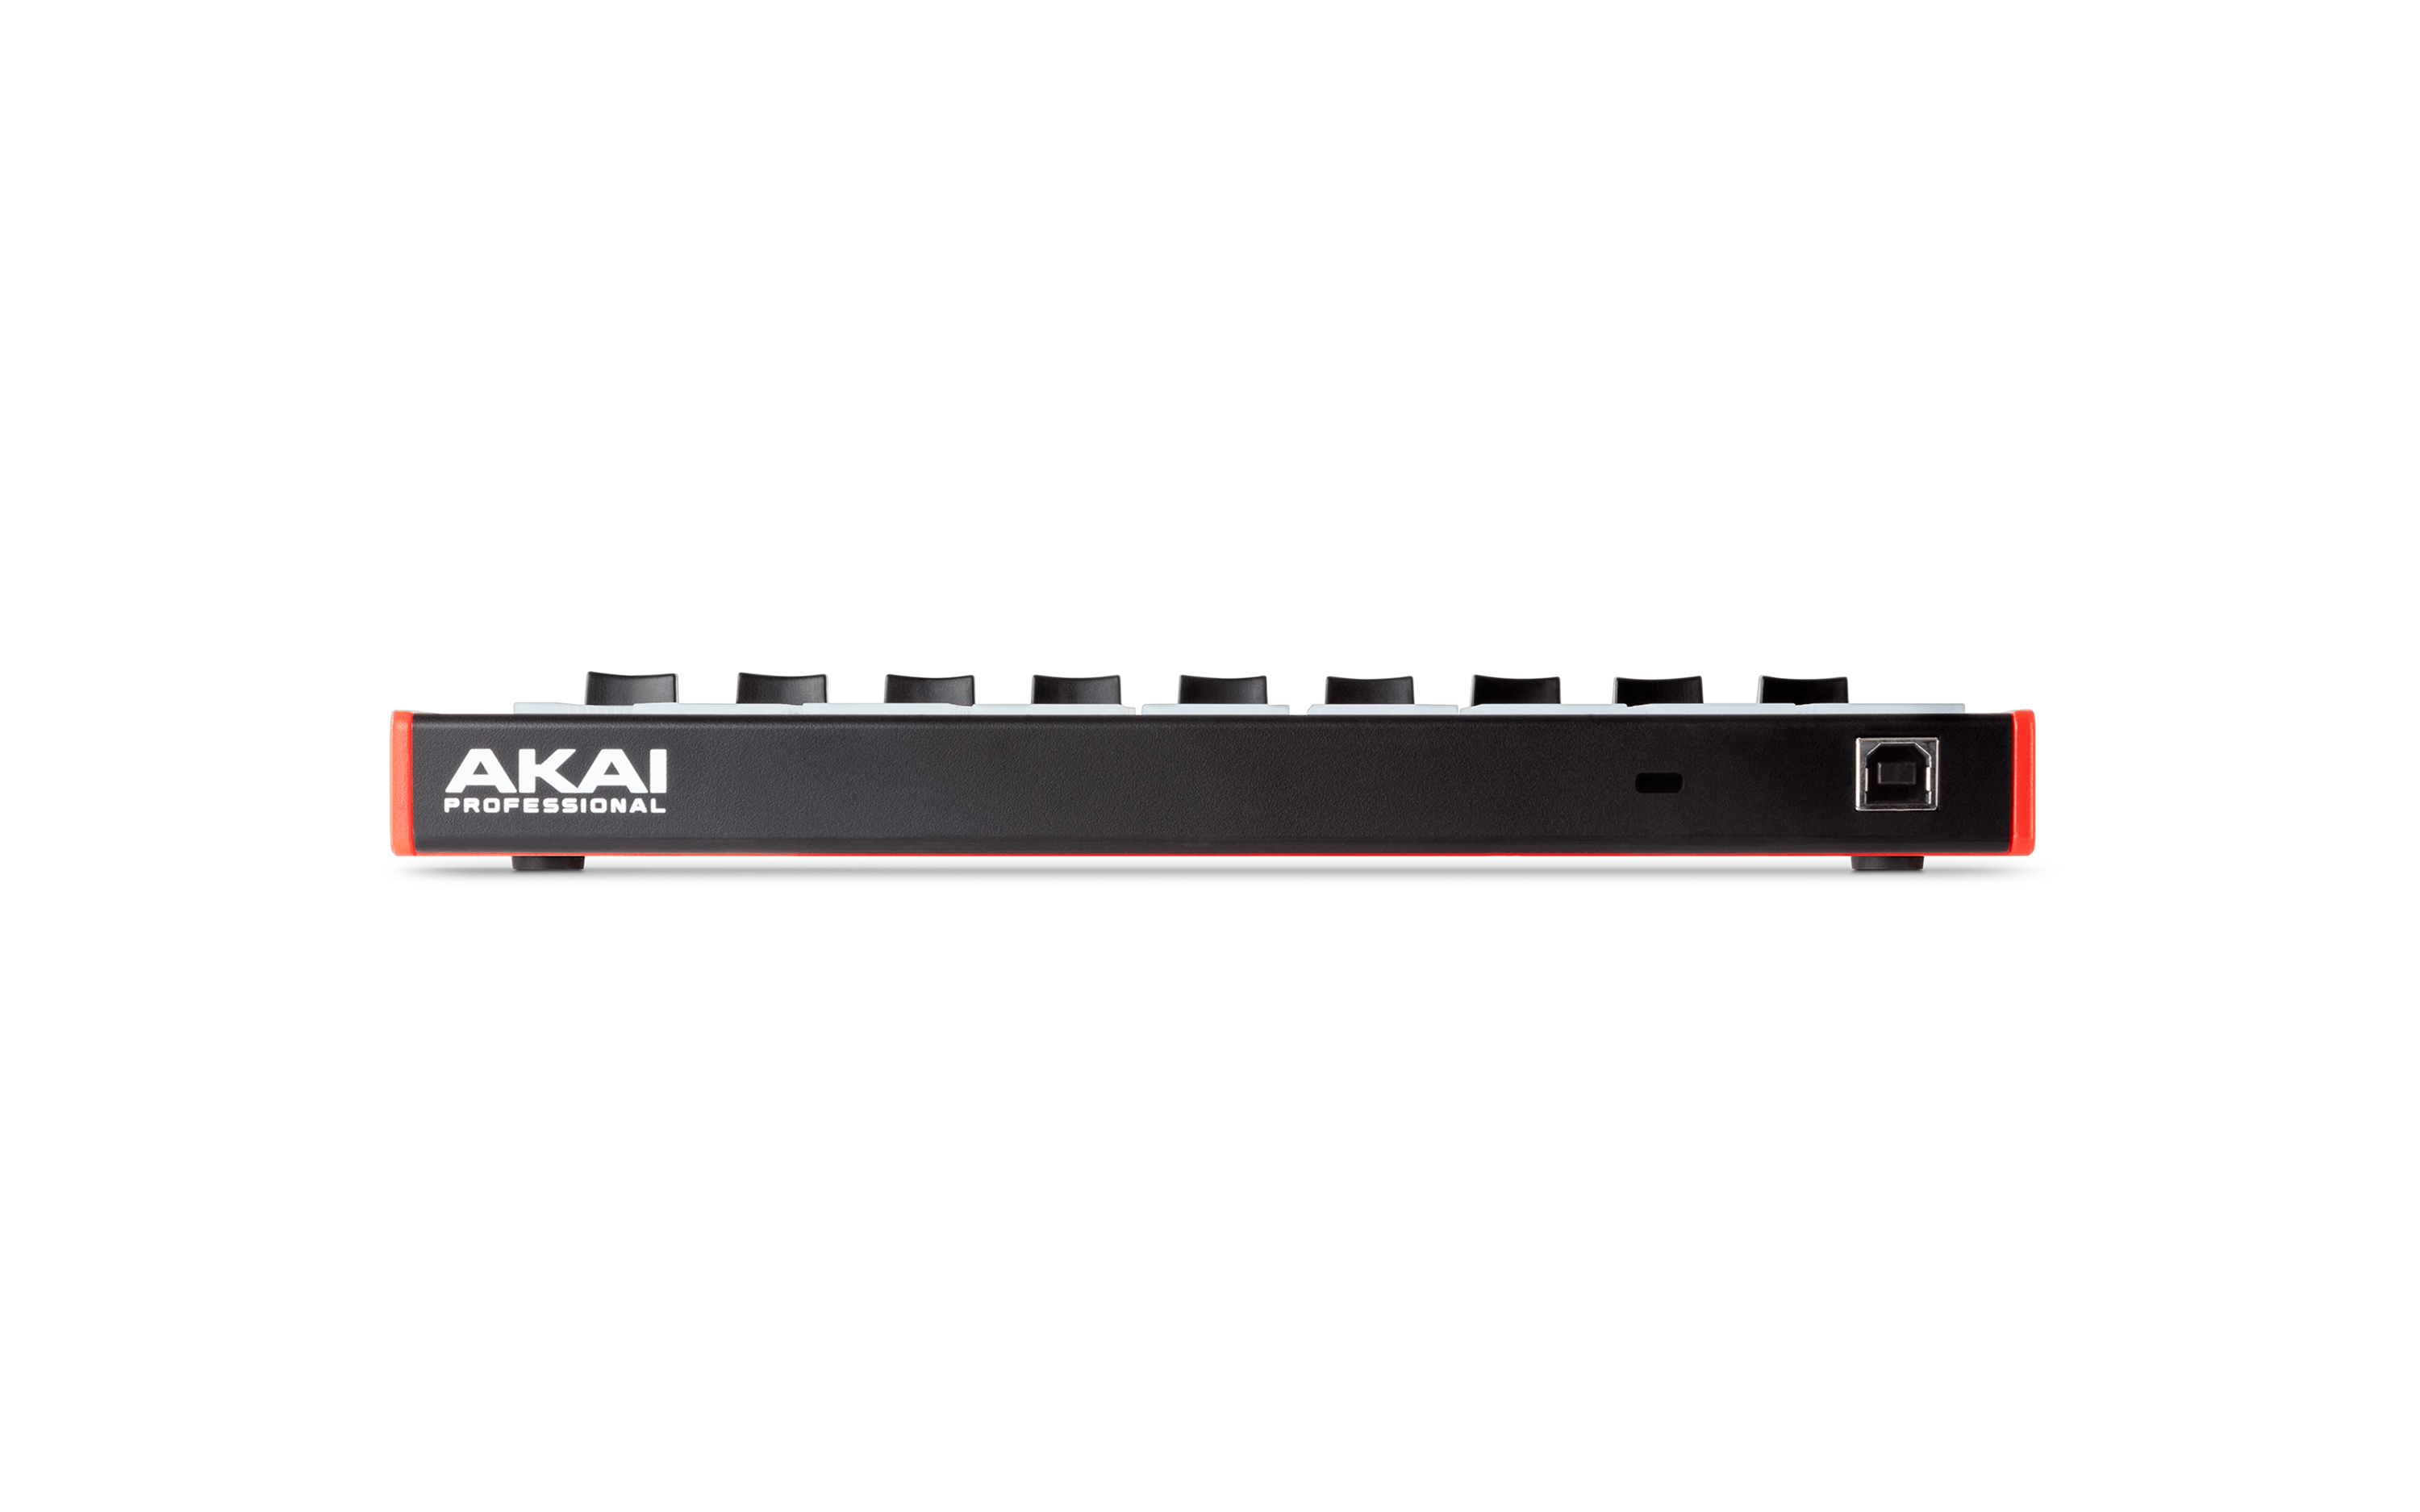 Akai Professional APC MINI MK2 - Usb Controller For Ableton Live